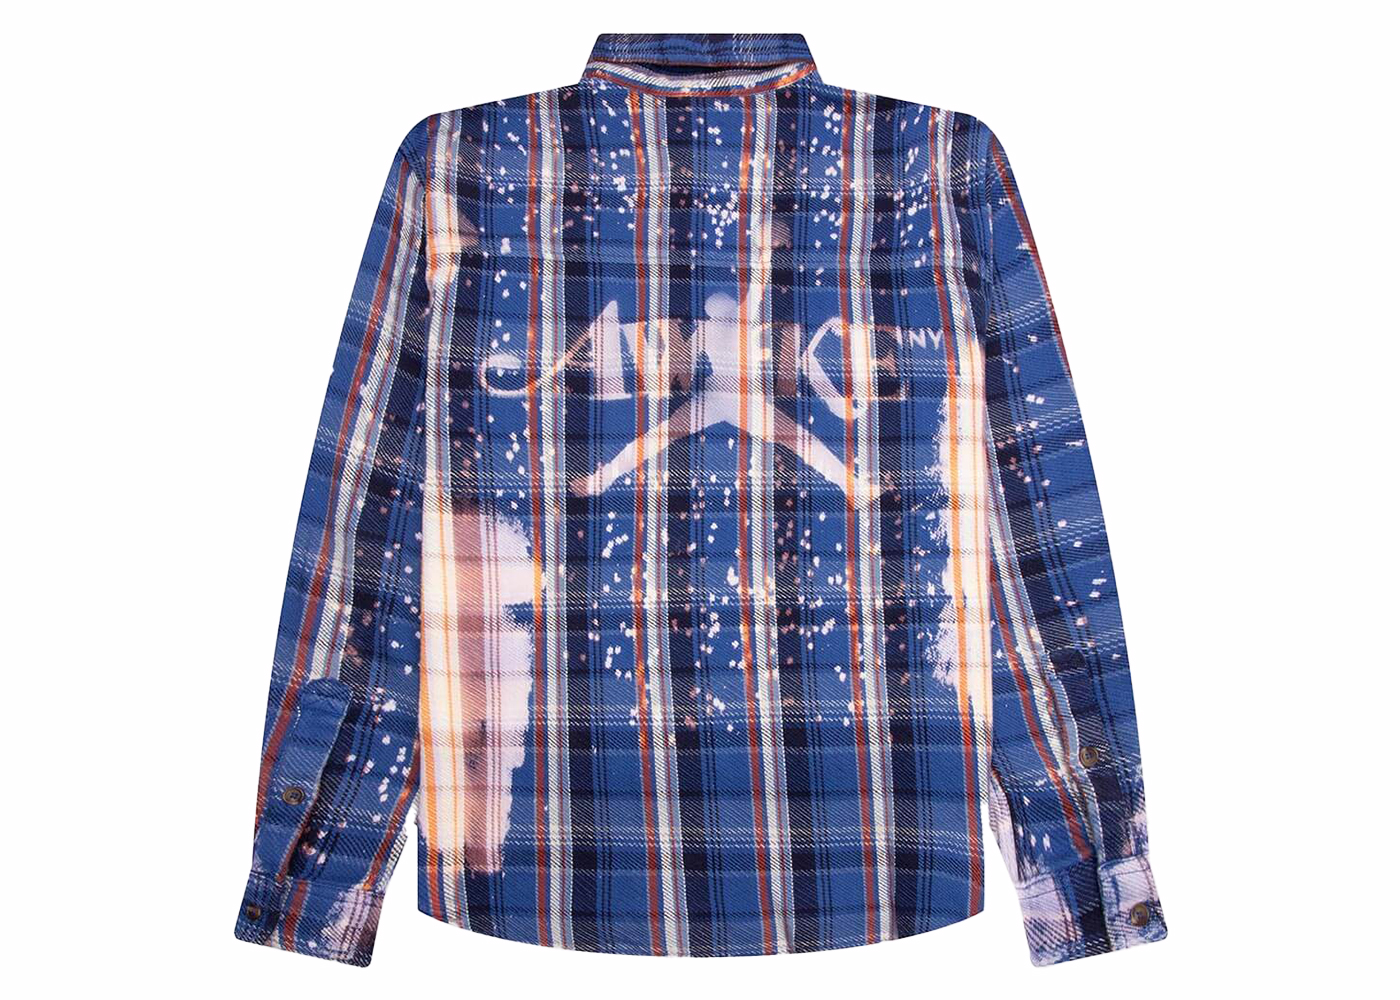 Nike JORDAN x Awake NY Flannel Shirtよろしくお願いします